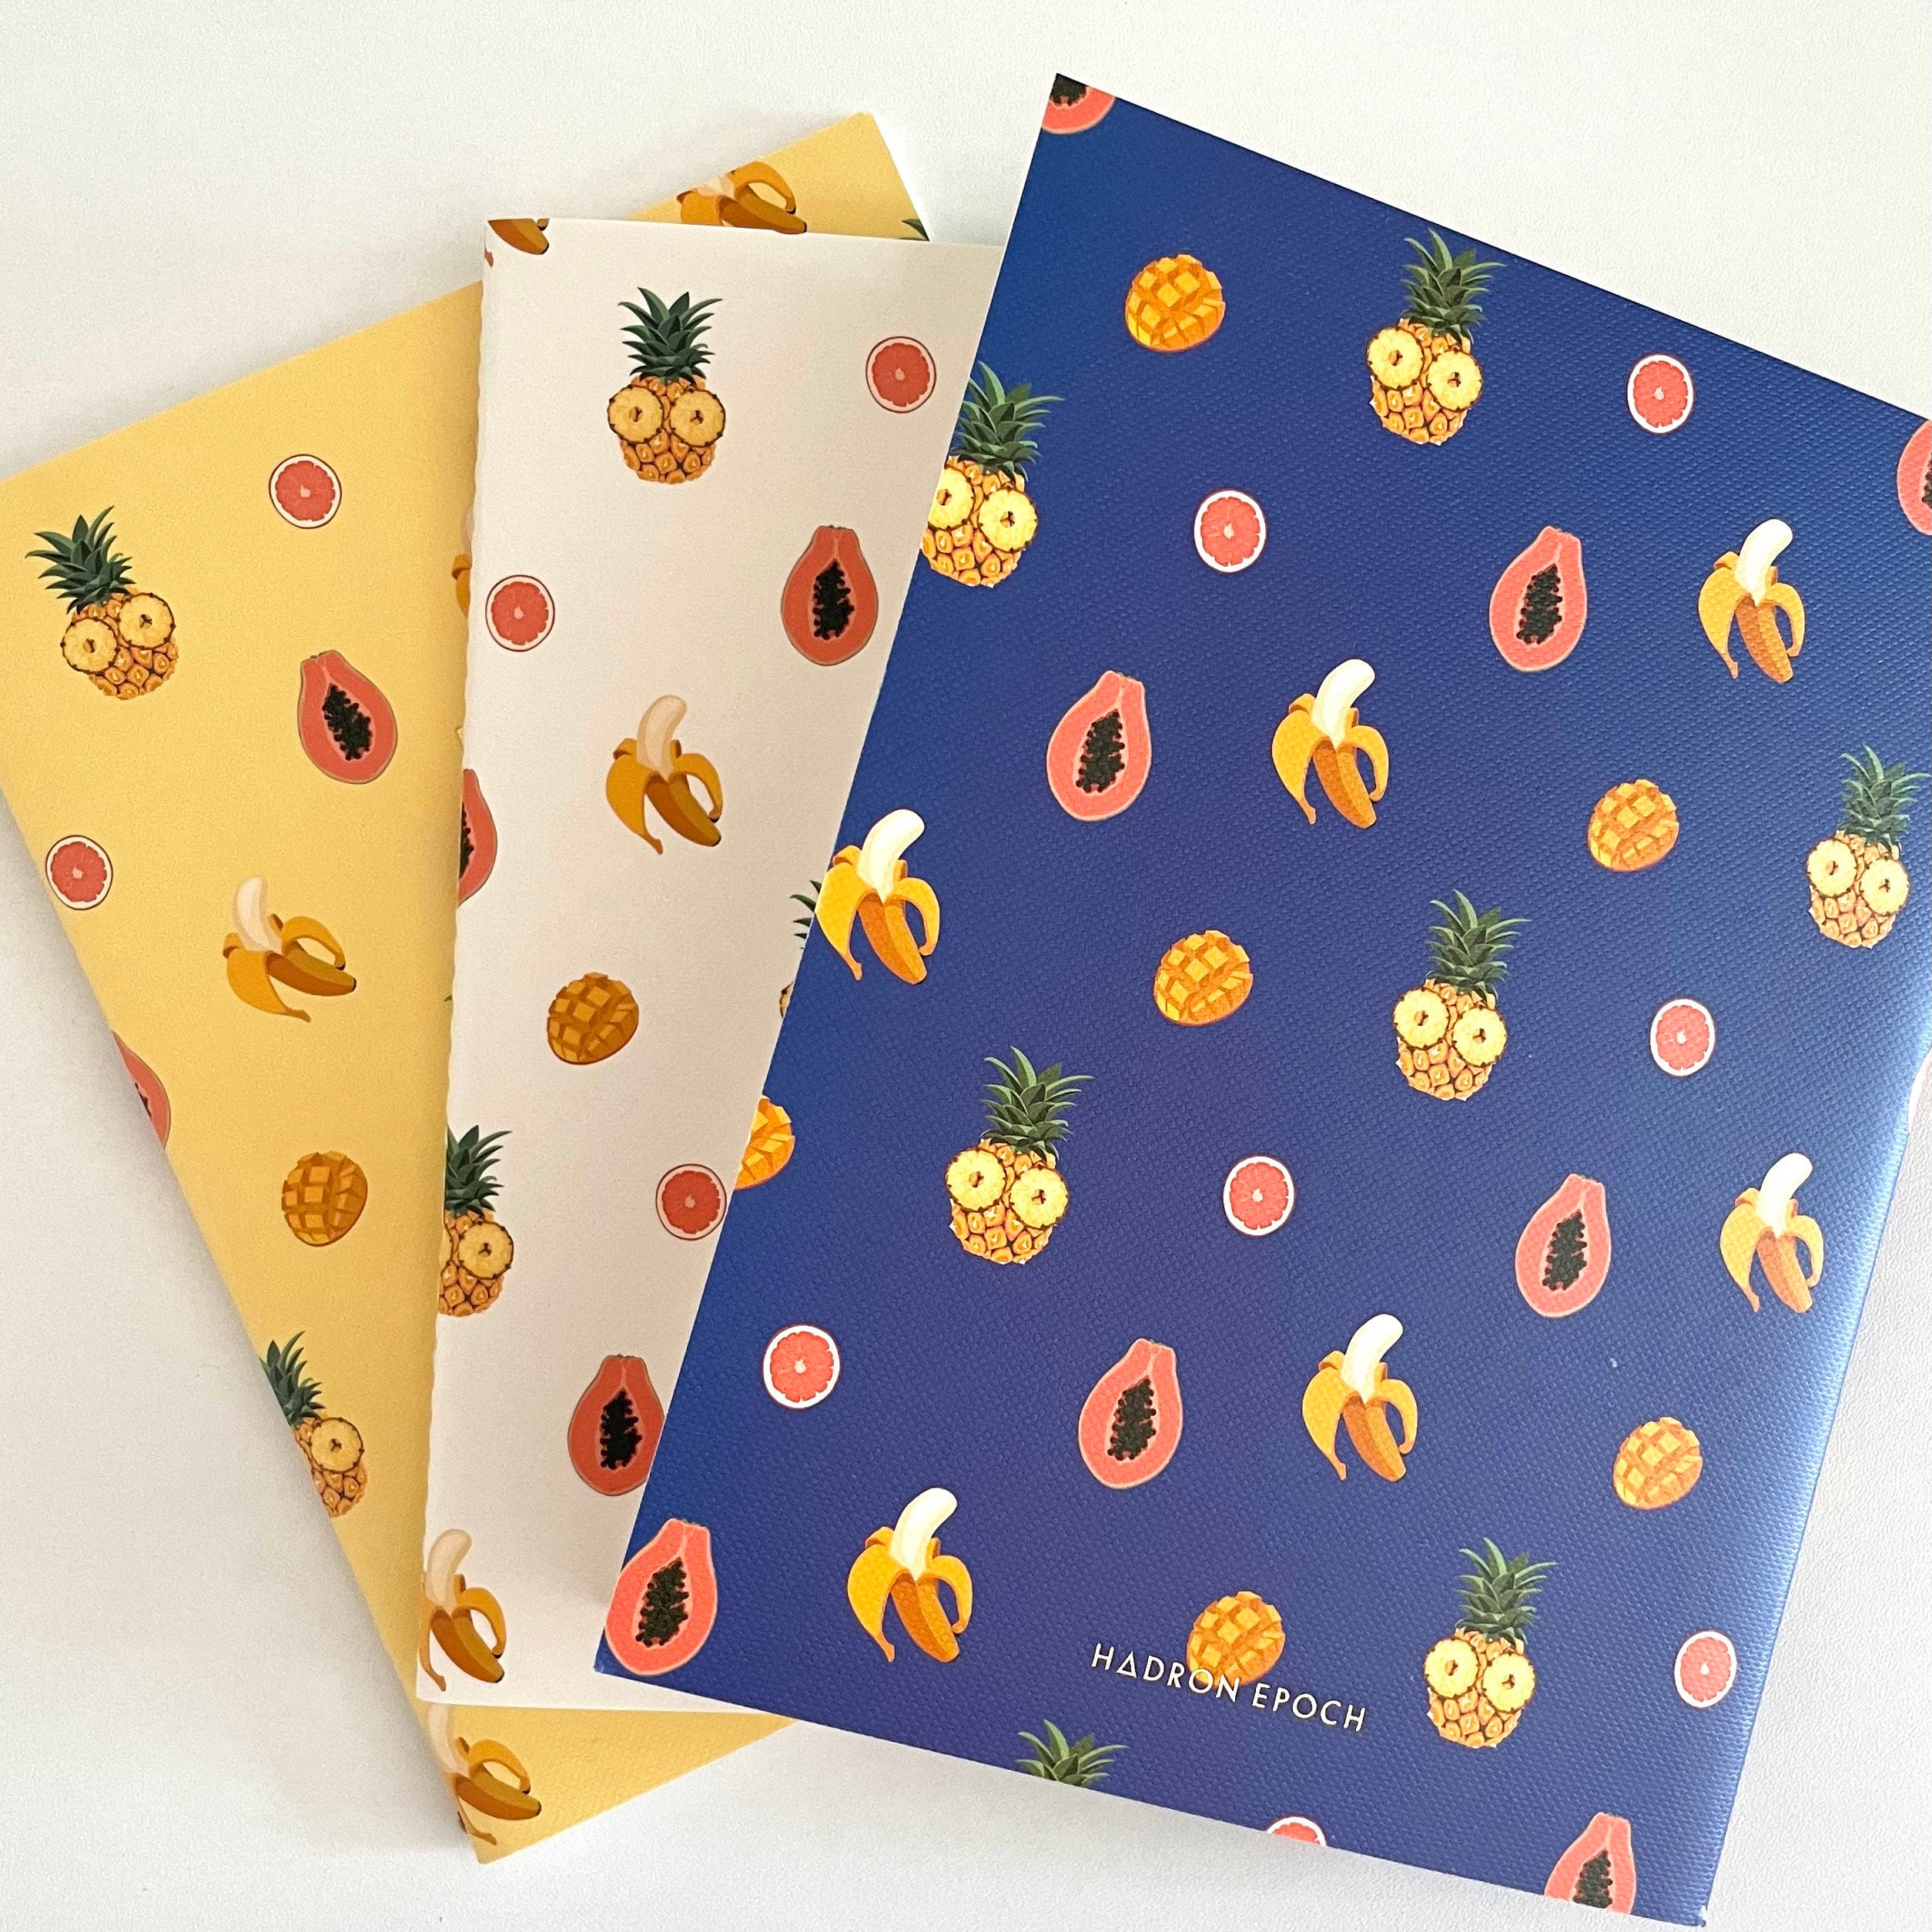 Favorite Bullet Journal Supplies - Pineapple Paper Co.